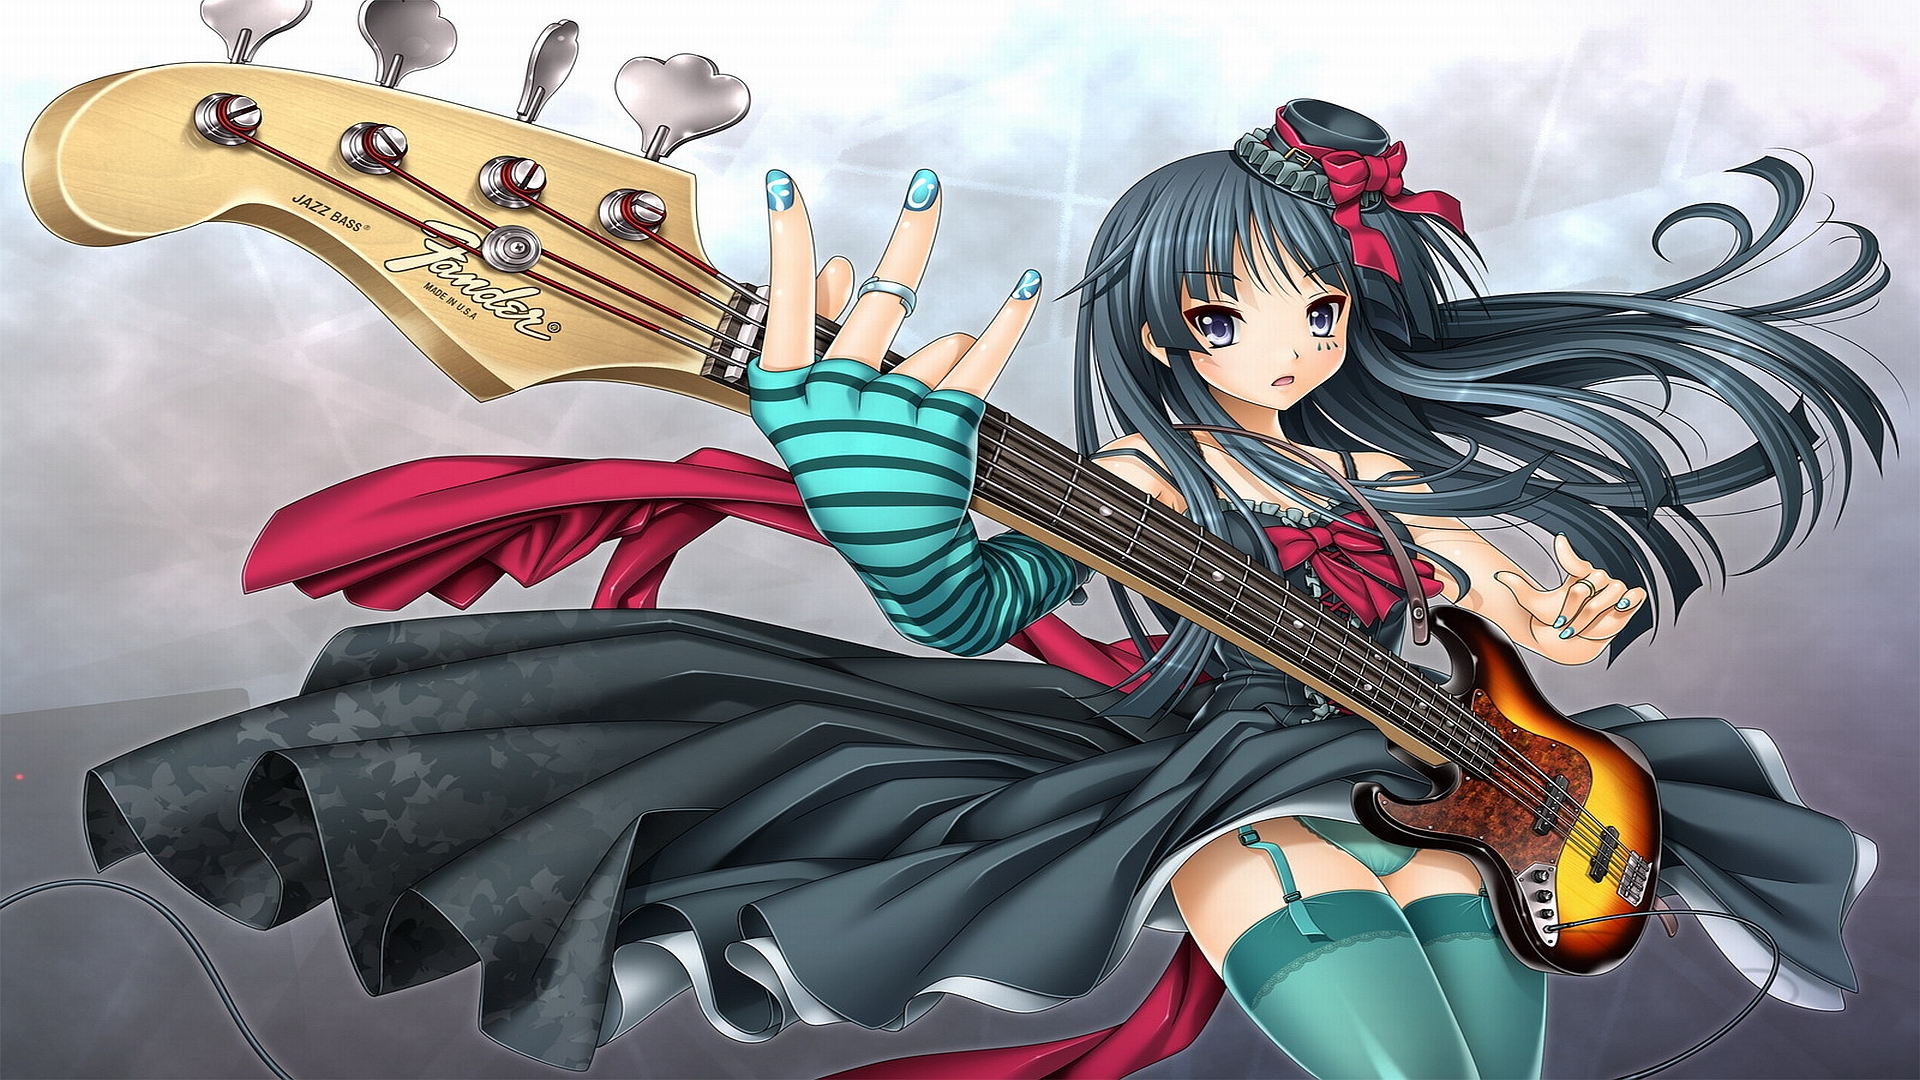 179780 descargar imagen animado, ¡kon!, guitarra, mio akiyama, música: fondos de pantalla y protectores de pantalla gratis